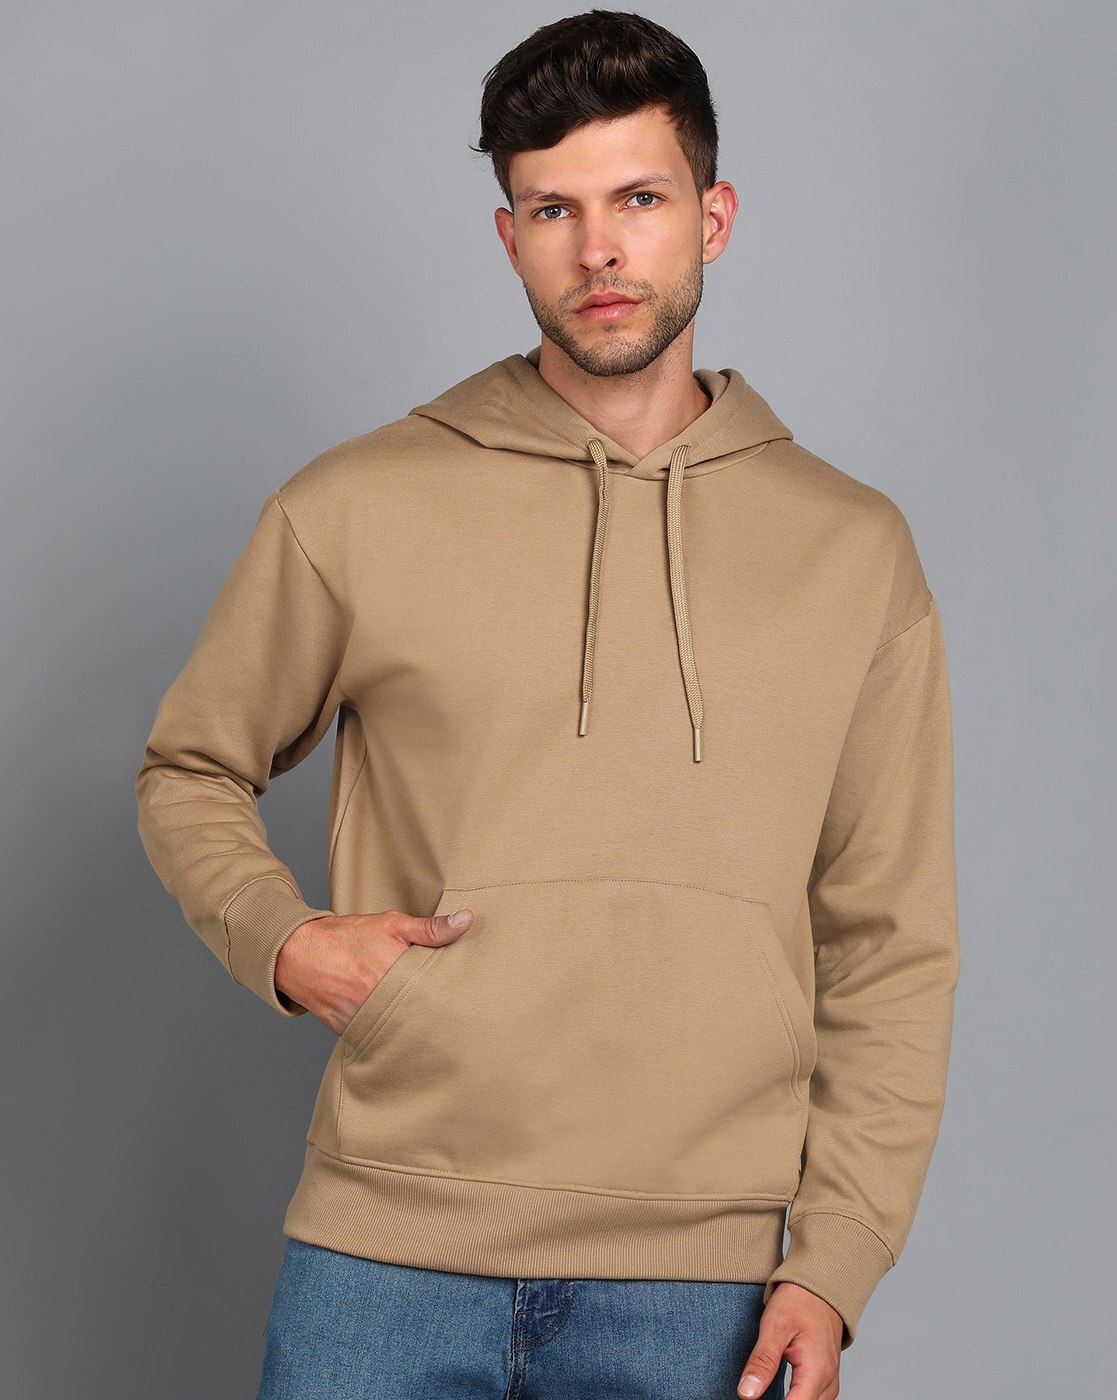 Slip-On Sweatshirt Hooded with Drawstring